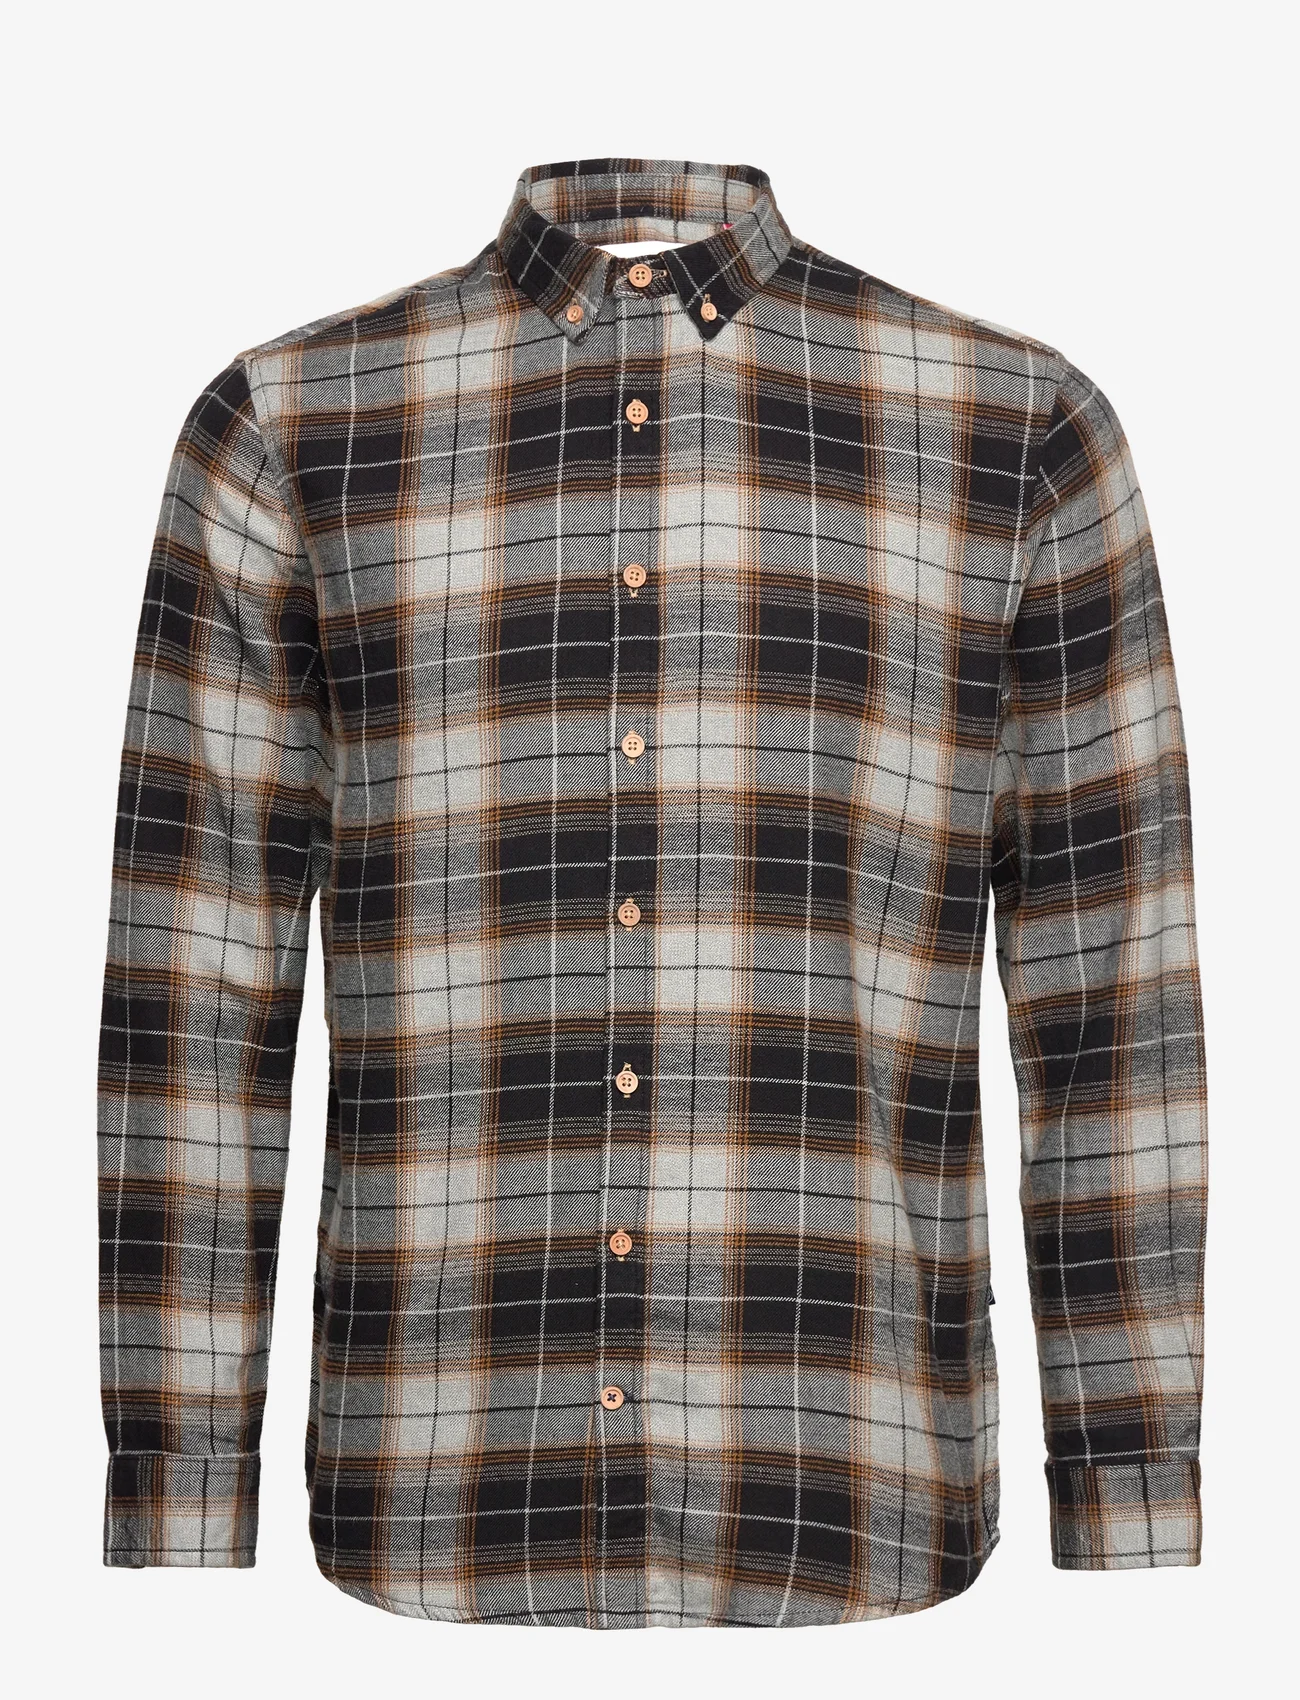 Kronstadt - Johan Flannel check 26 shirt - languoti marškiniai - black / grey - 0